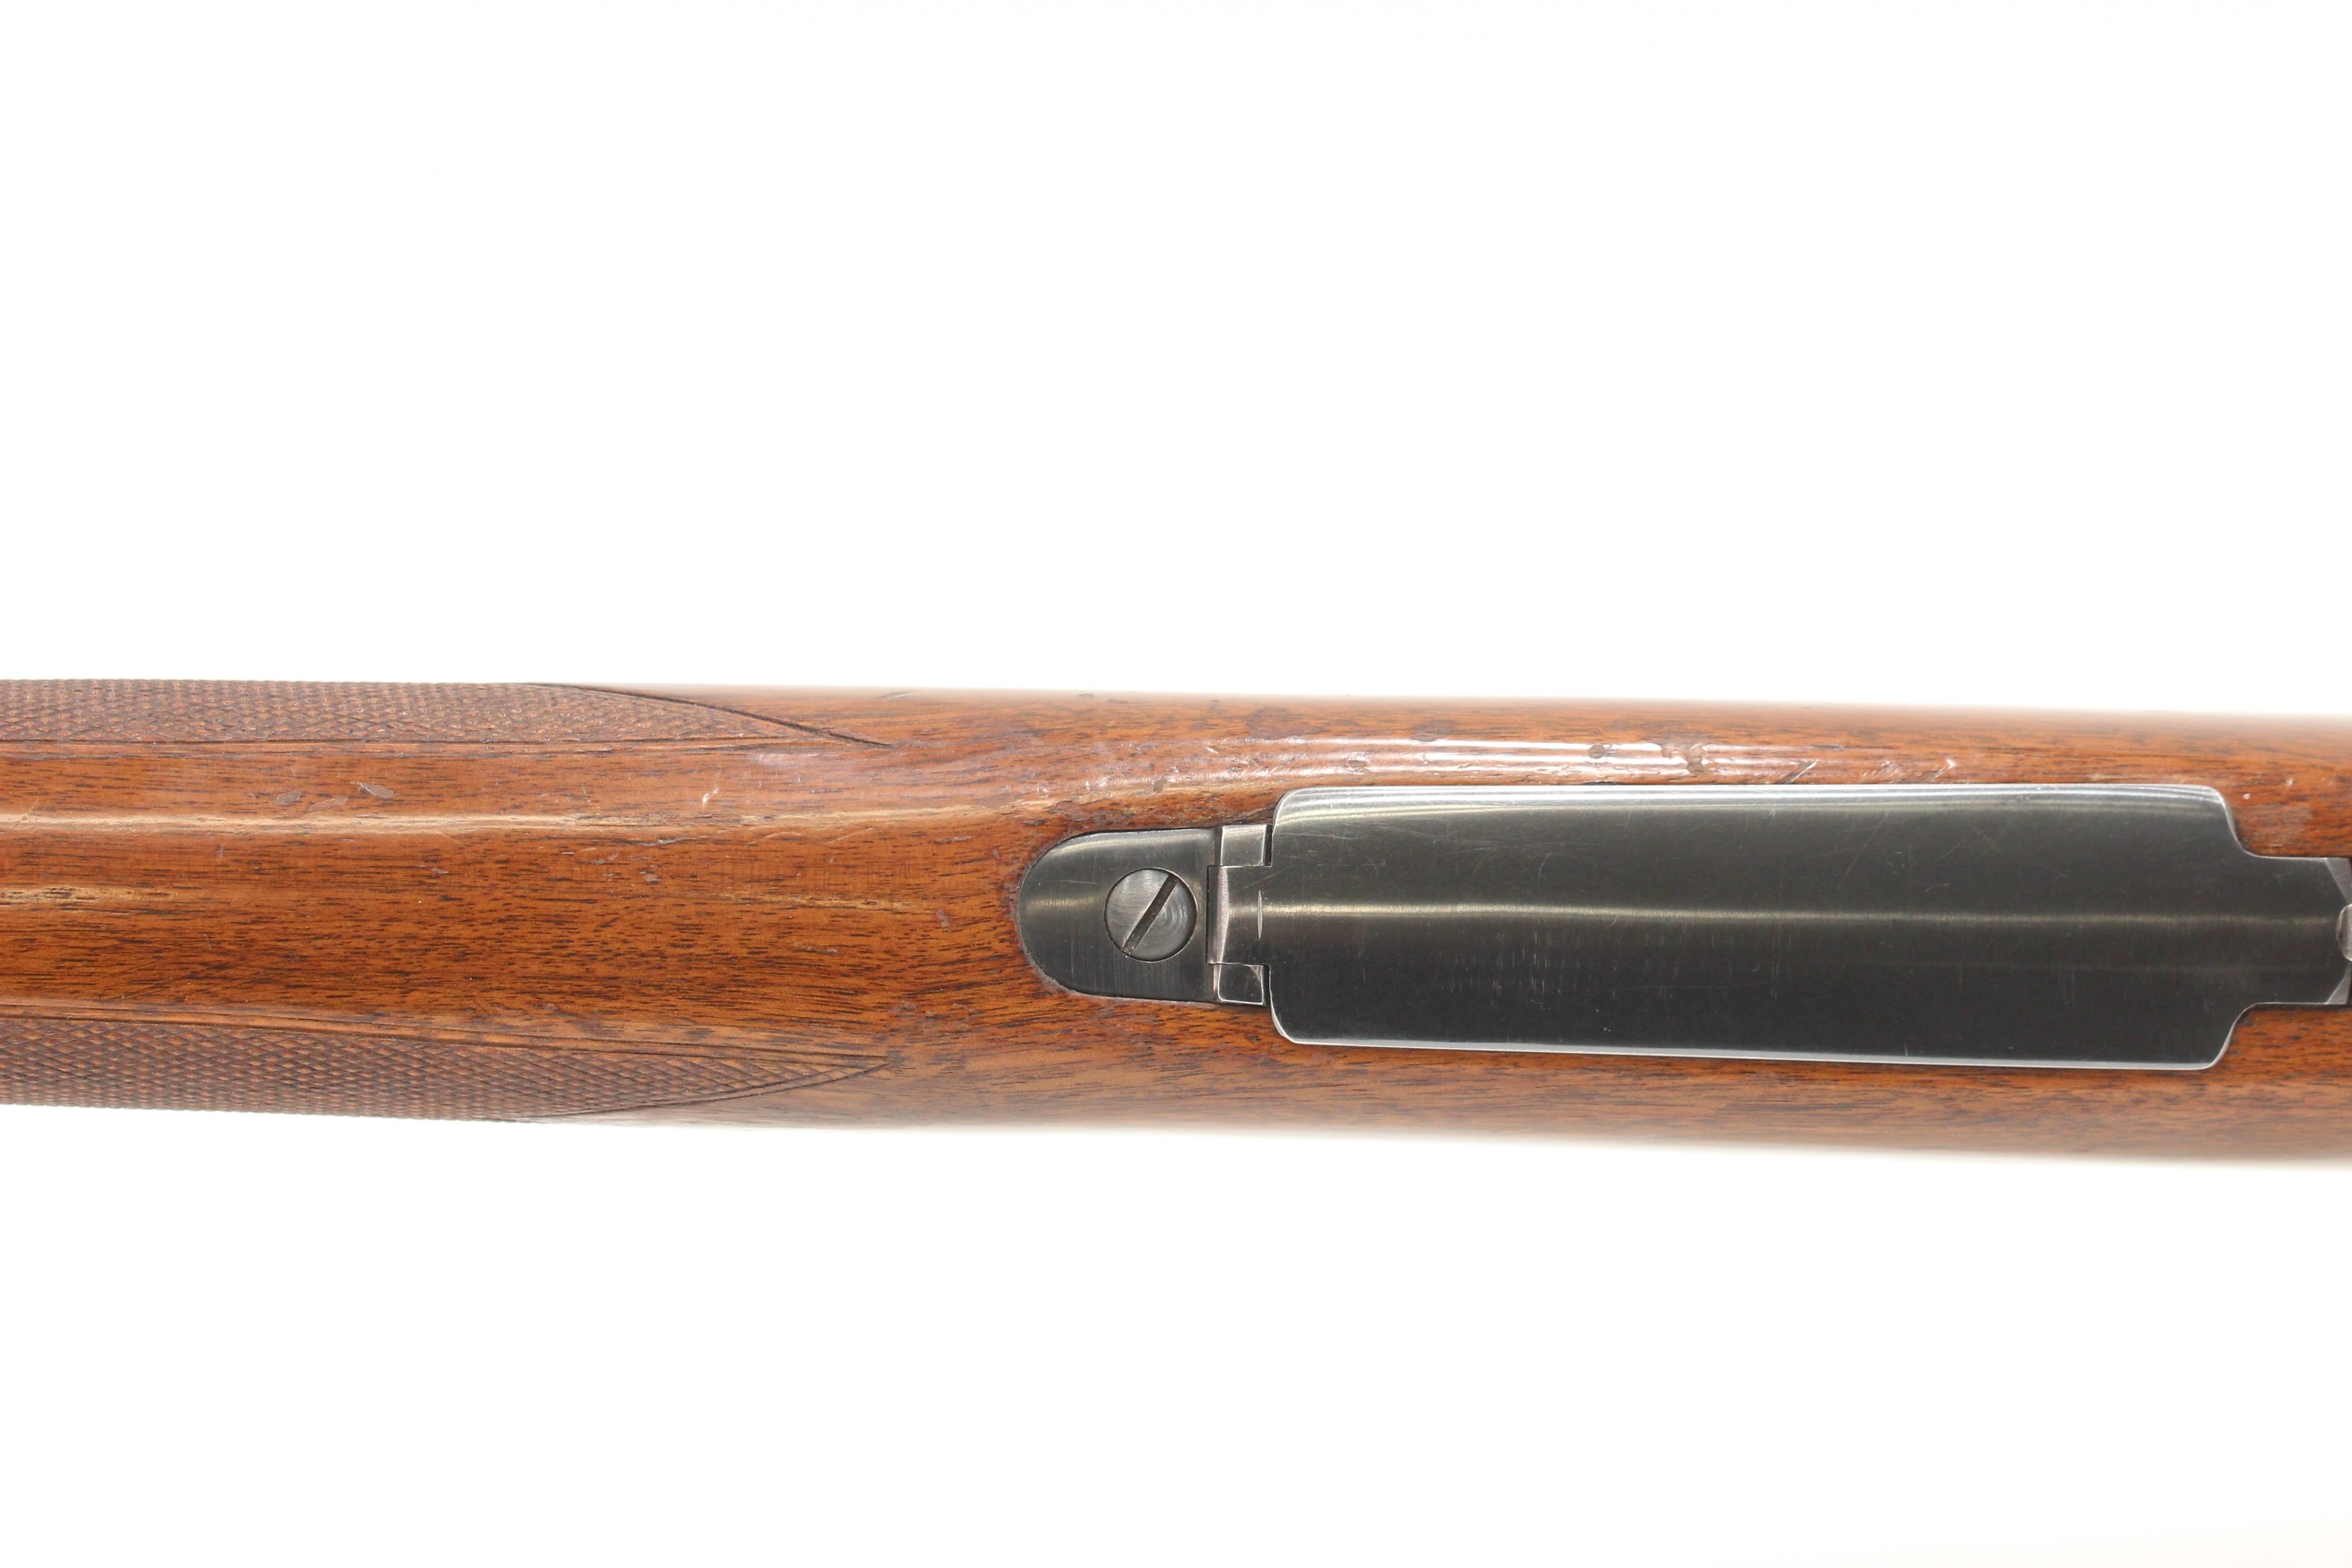 .30 Gov't '06 Standard Rifle - 1948